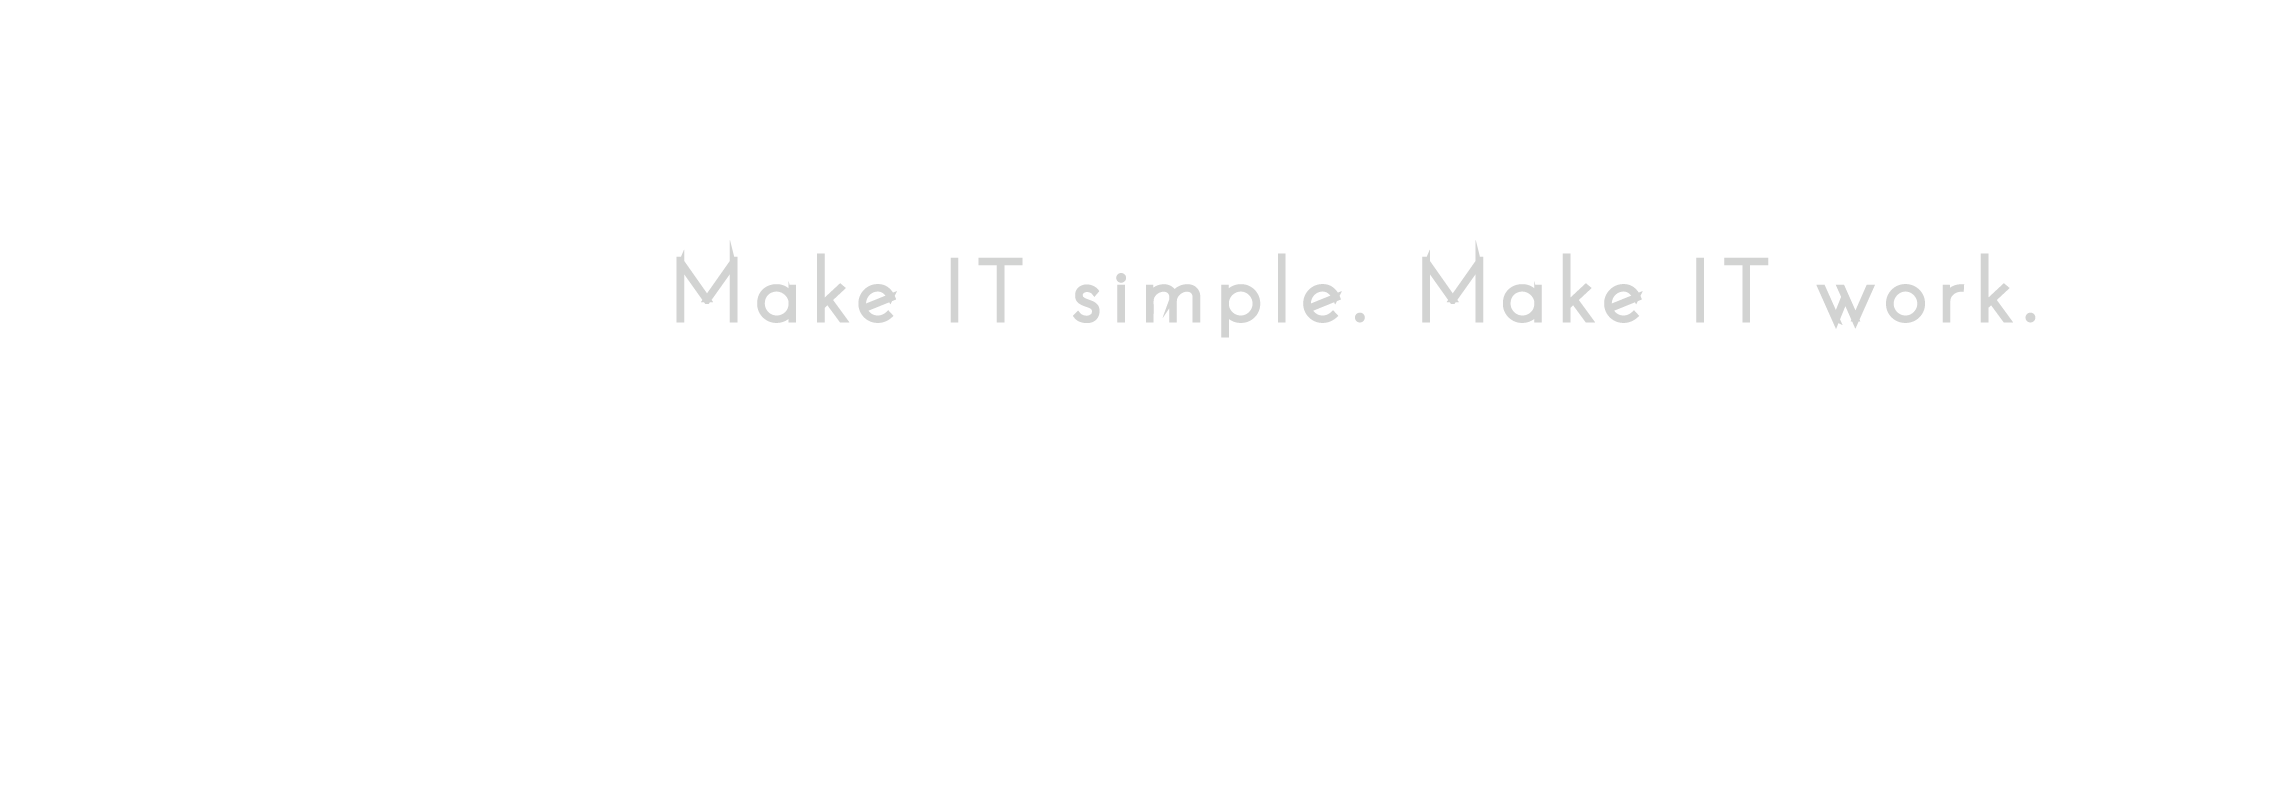 Computer Wizard Assistenza informatica logo mobile